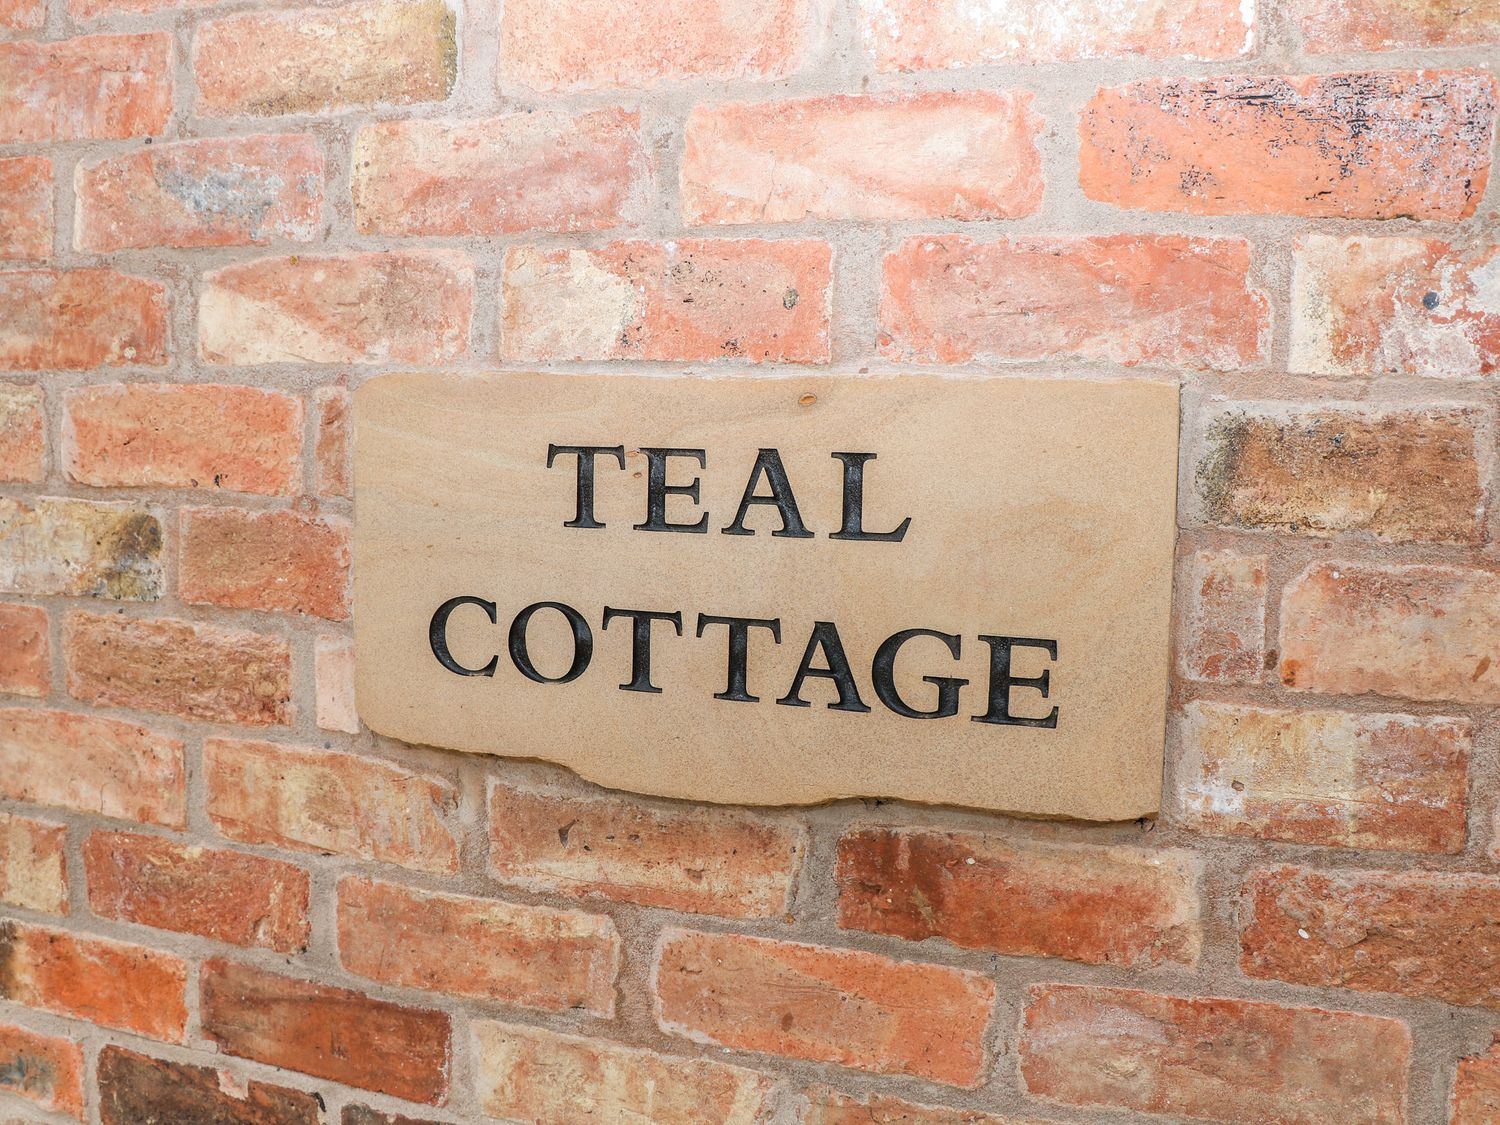 Teal Cottage, Melton Mowbray